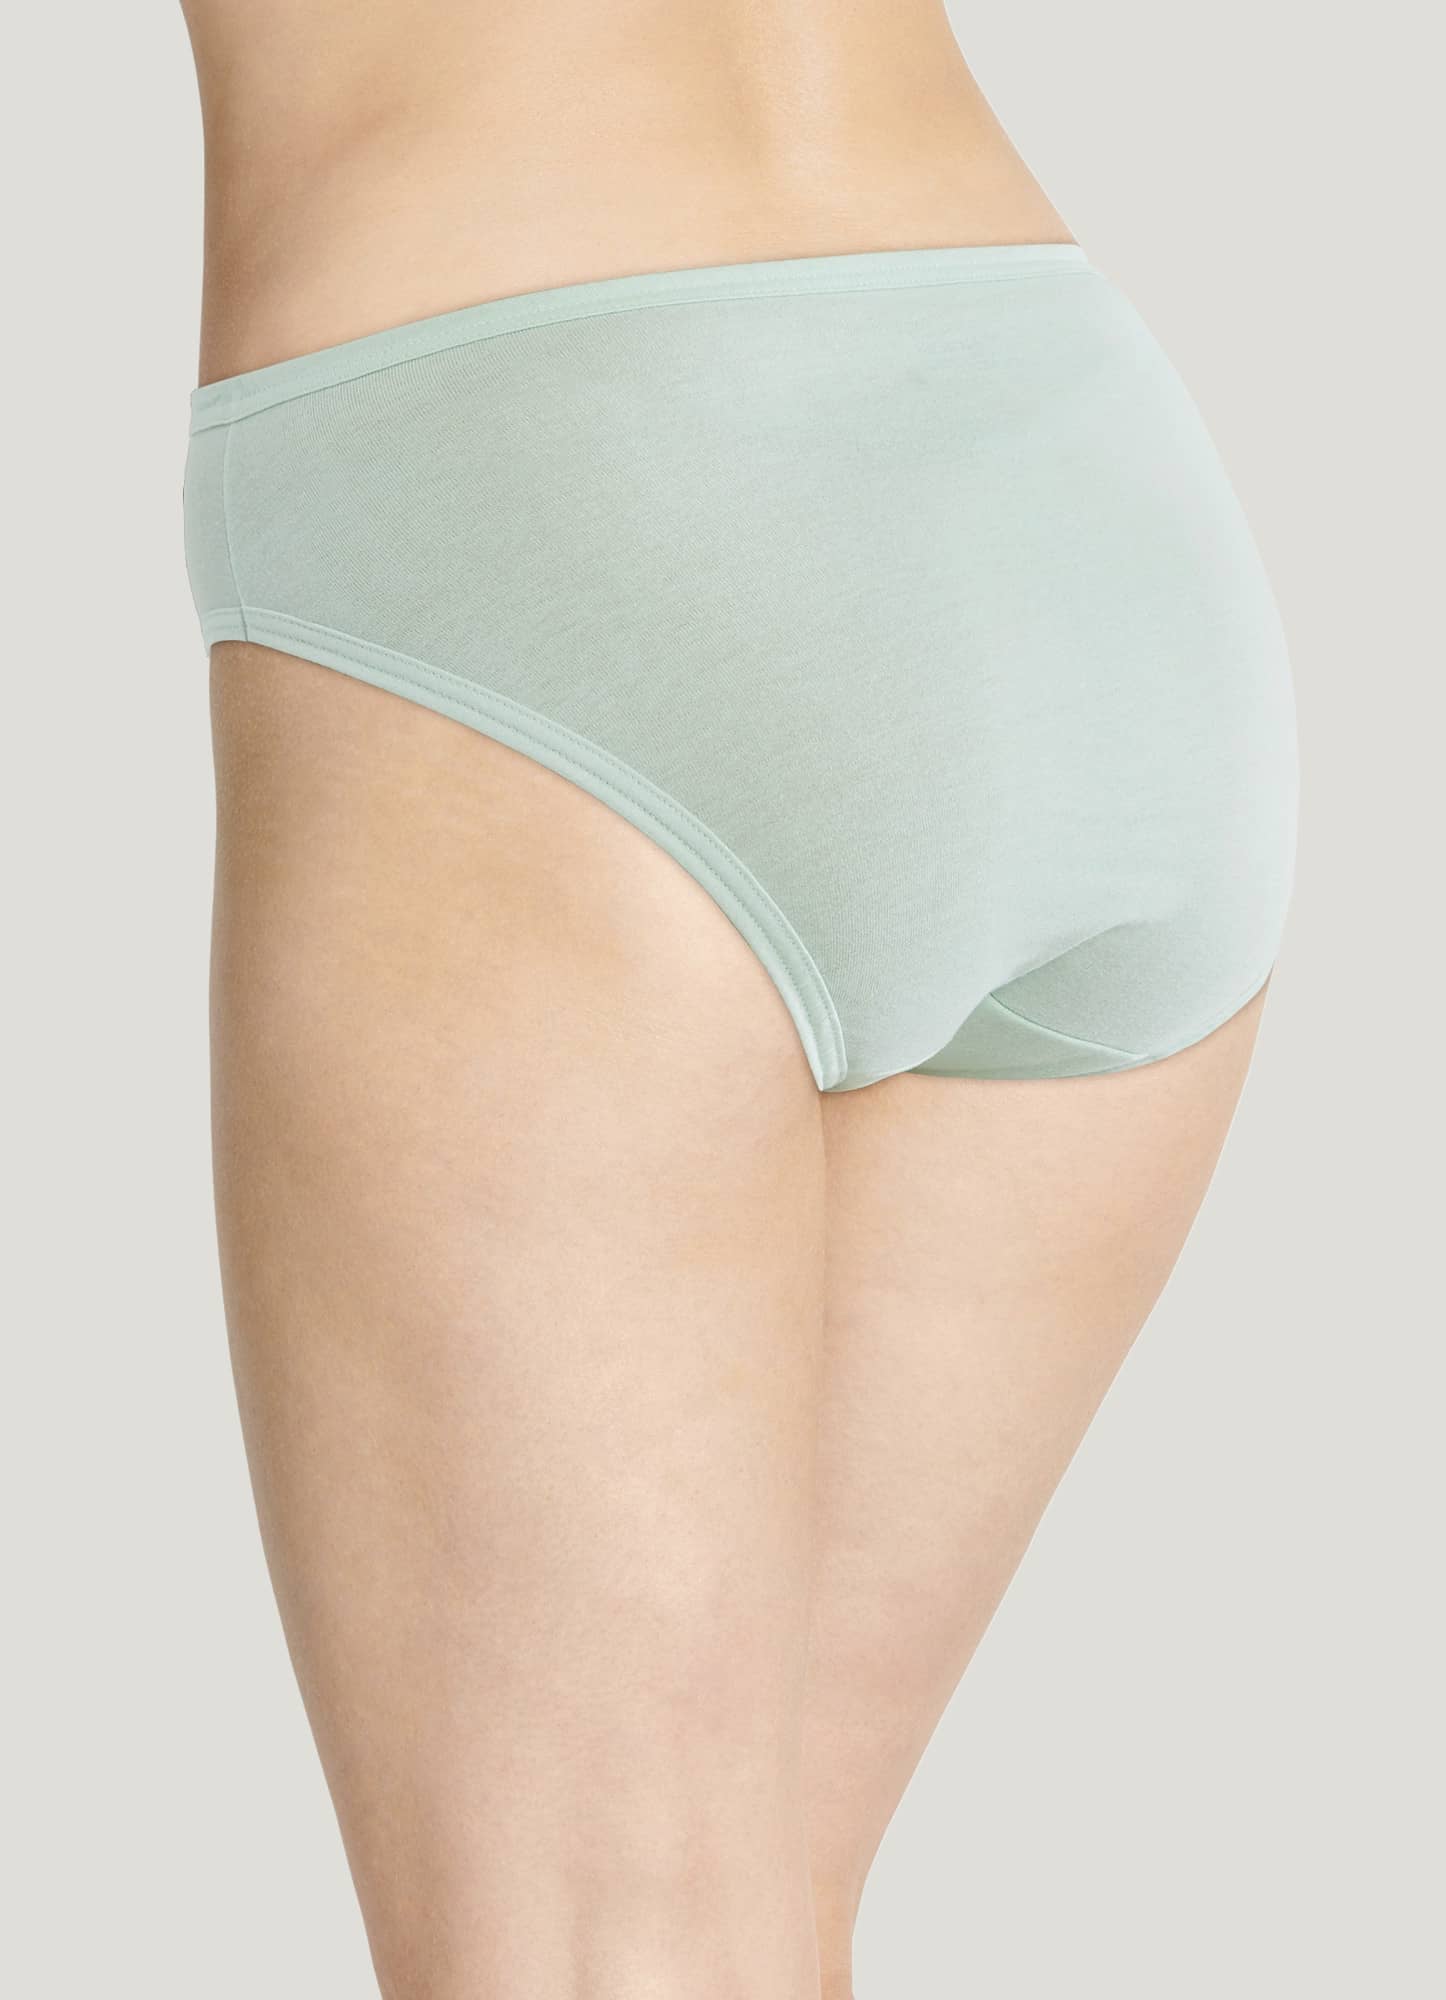 Jockey Women's Underwear Elance French Cut - 6 Pack, Ivory/Light